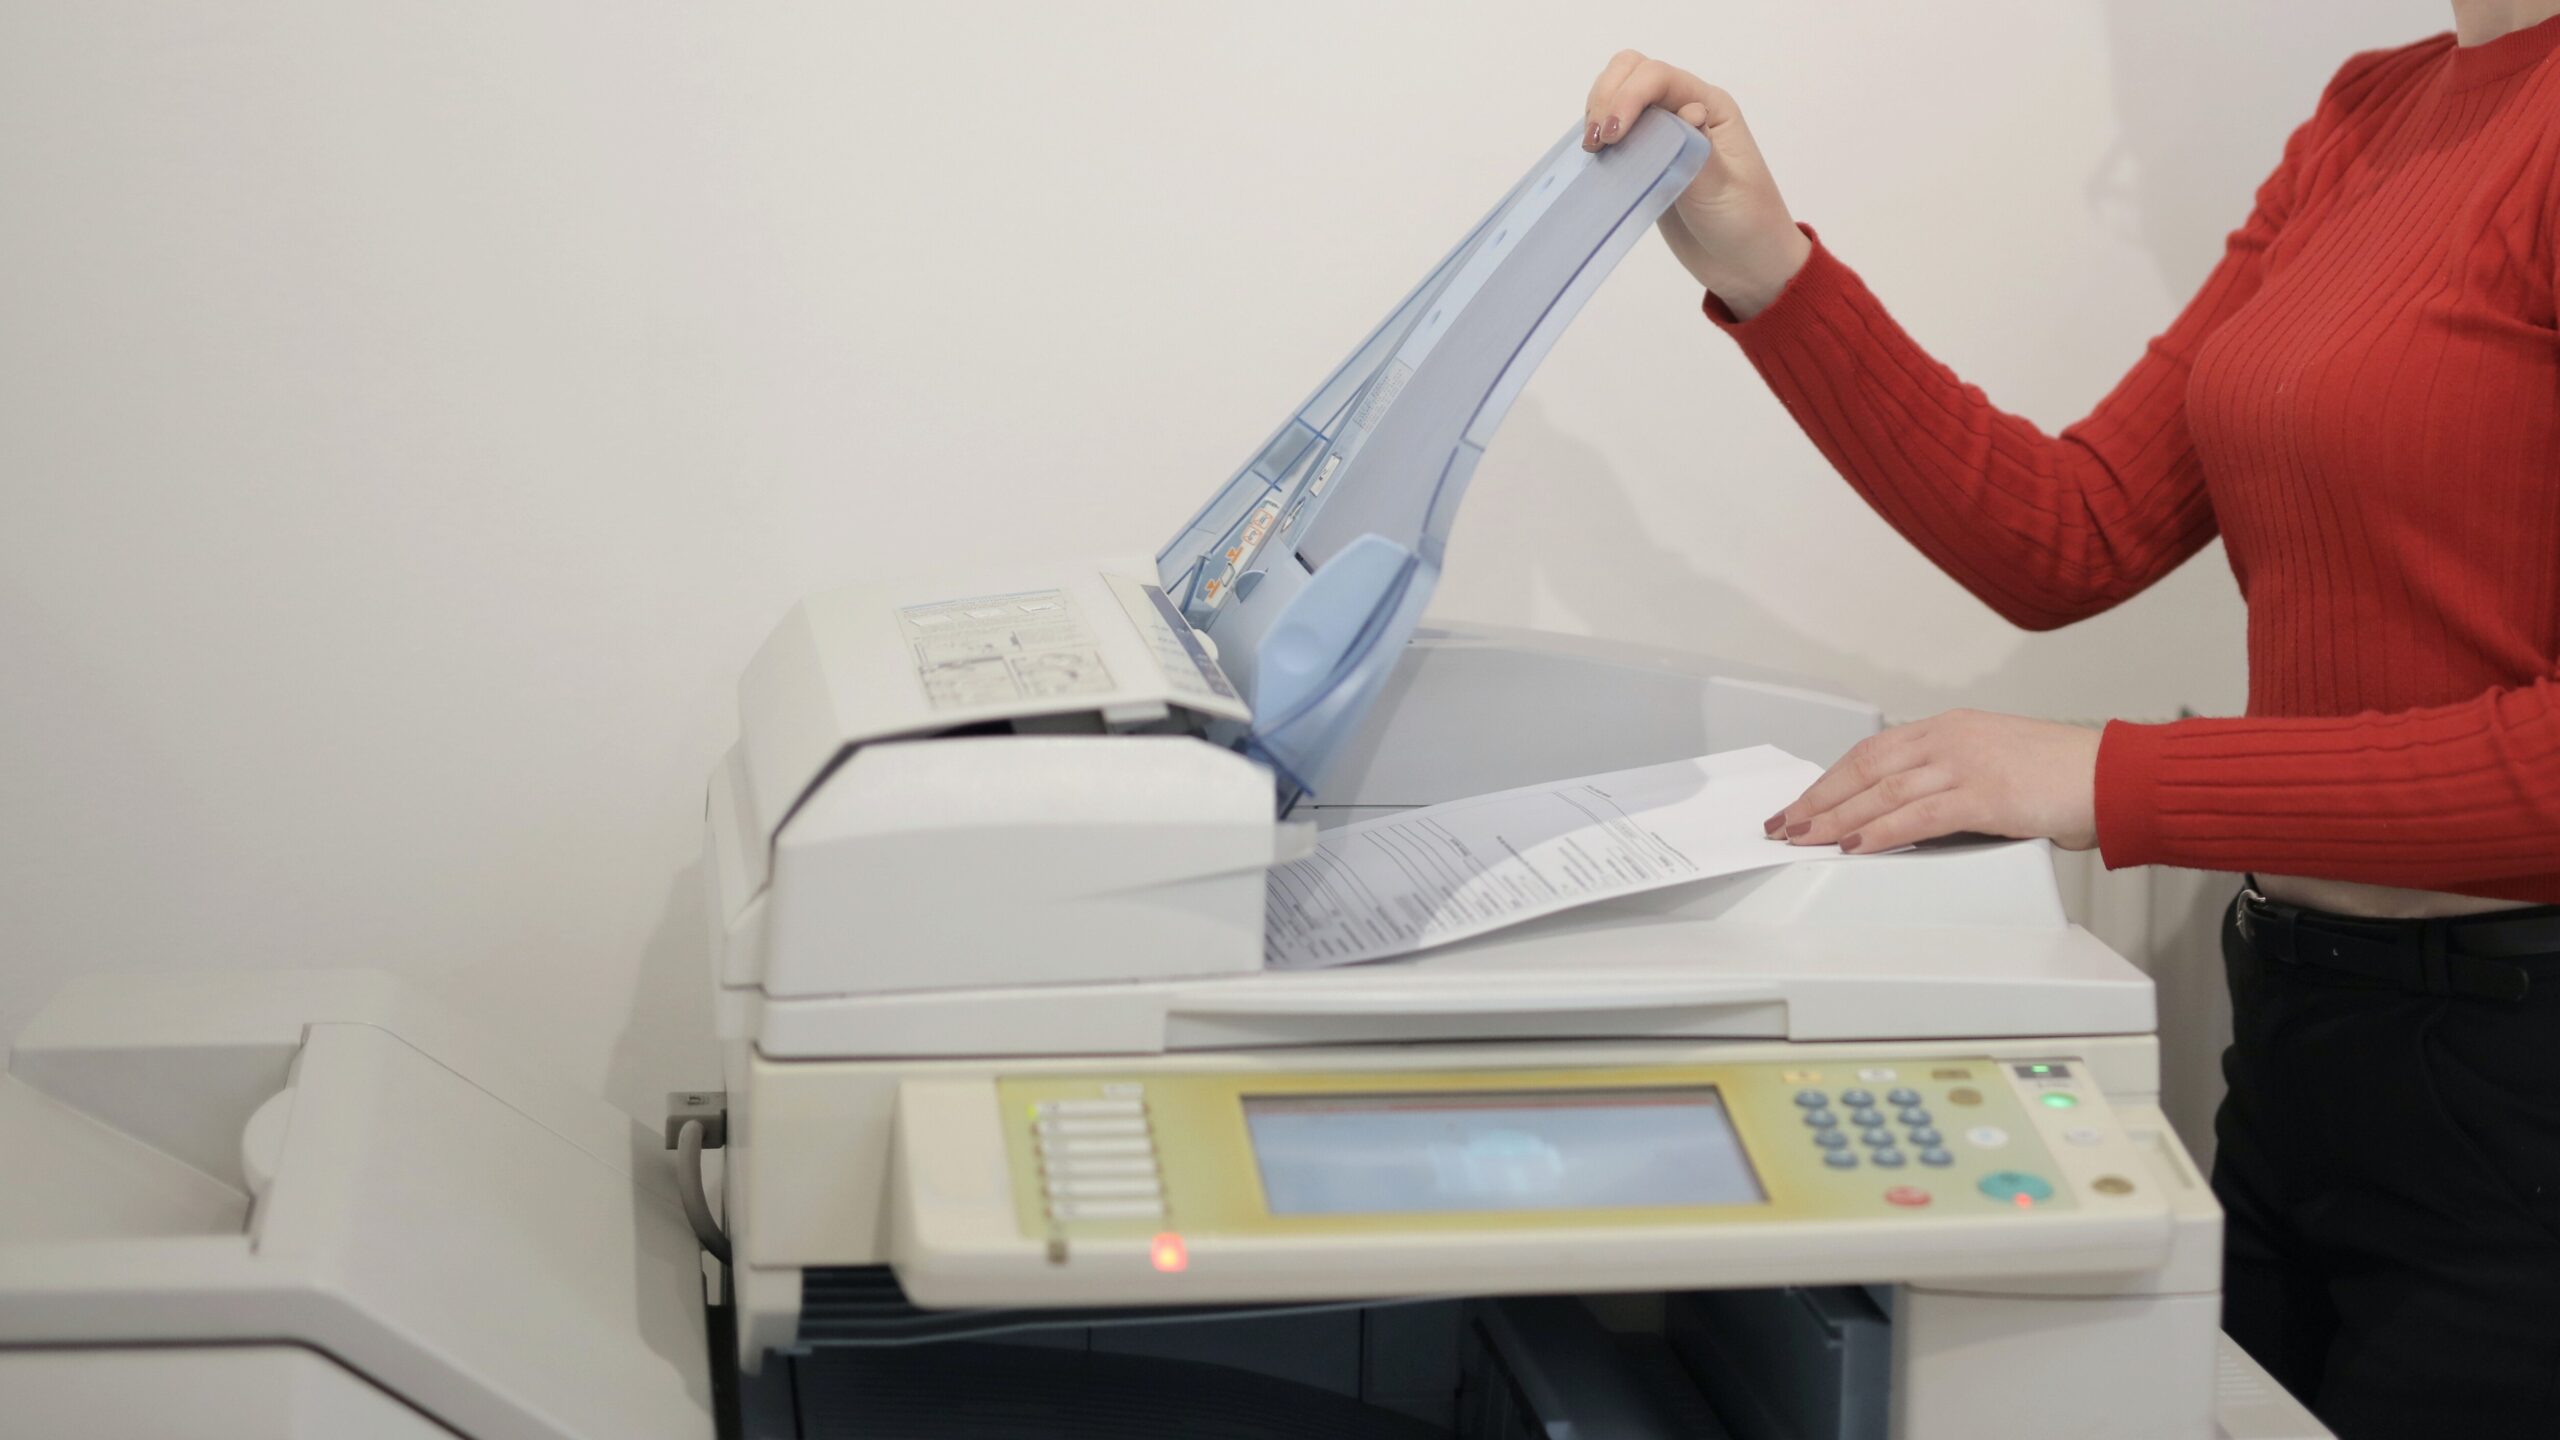 cheap fax machines of 2021 top picks